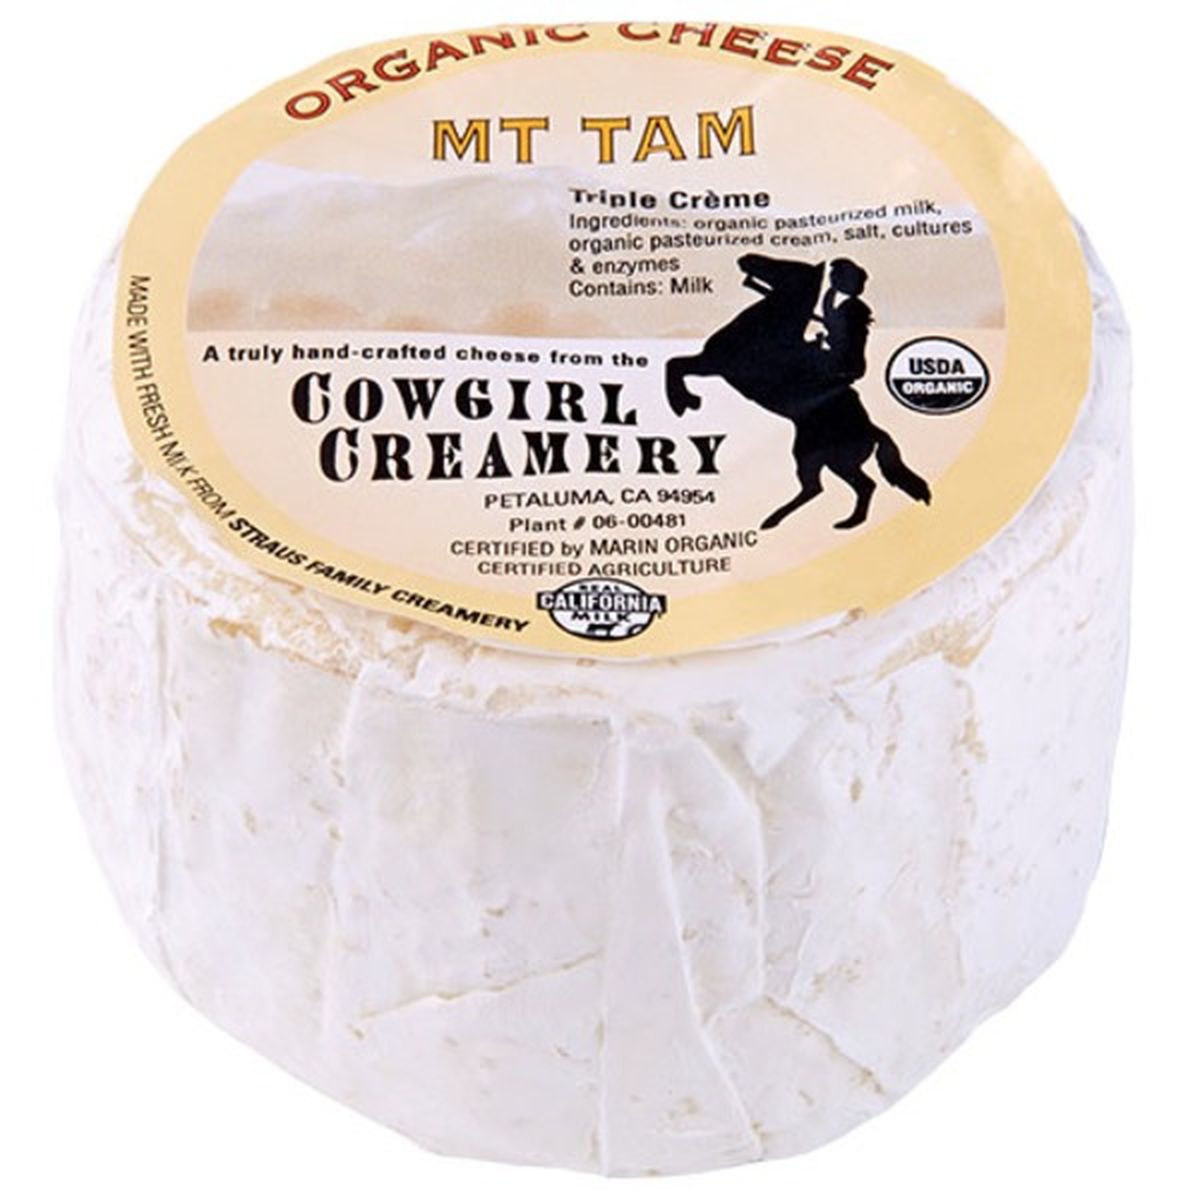 Calories in Cowgirls Creamery Organic Cheese, Mt. Tam, Triple Creme